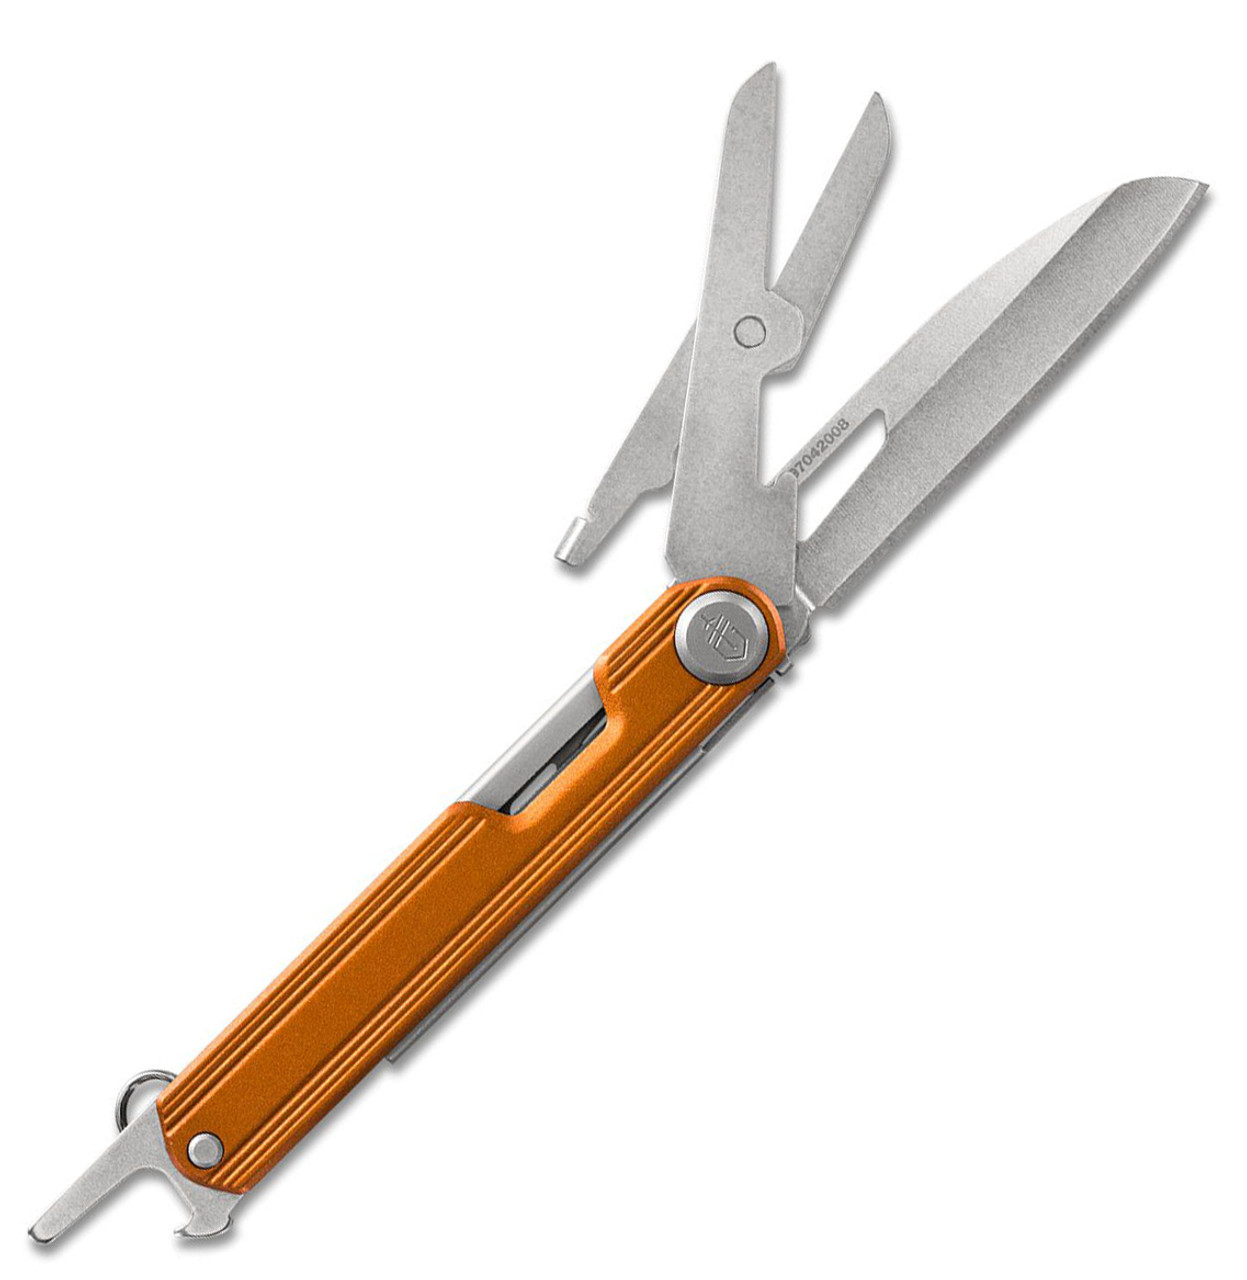 Gerber Armbar Slim Cut - Burnt Orange 30-001724, 2.5" Plain Blade, Burnt Orange Aluminum Handle, 3 in 1 Multi-Tool